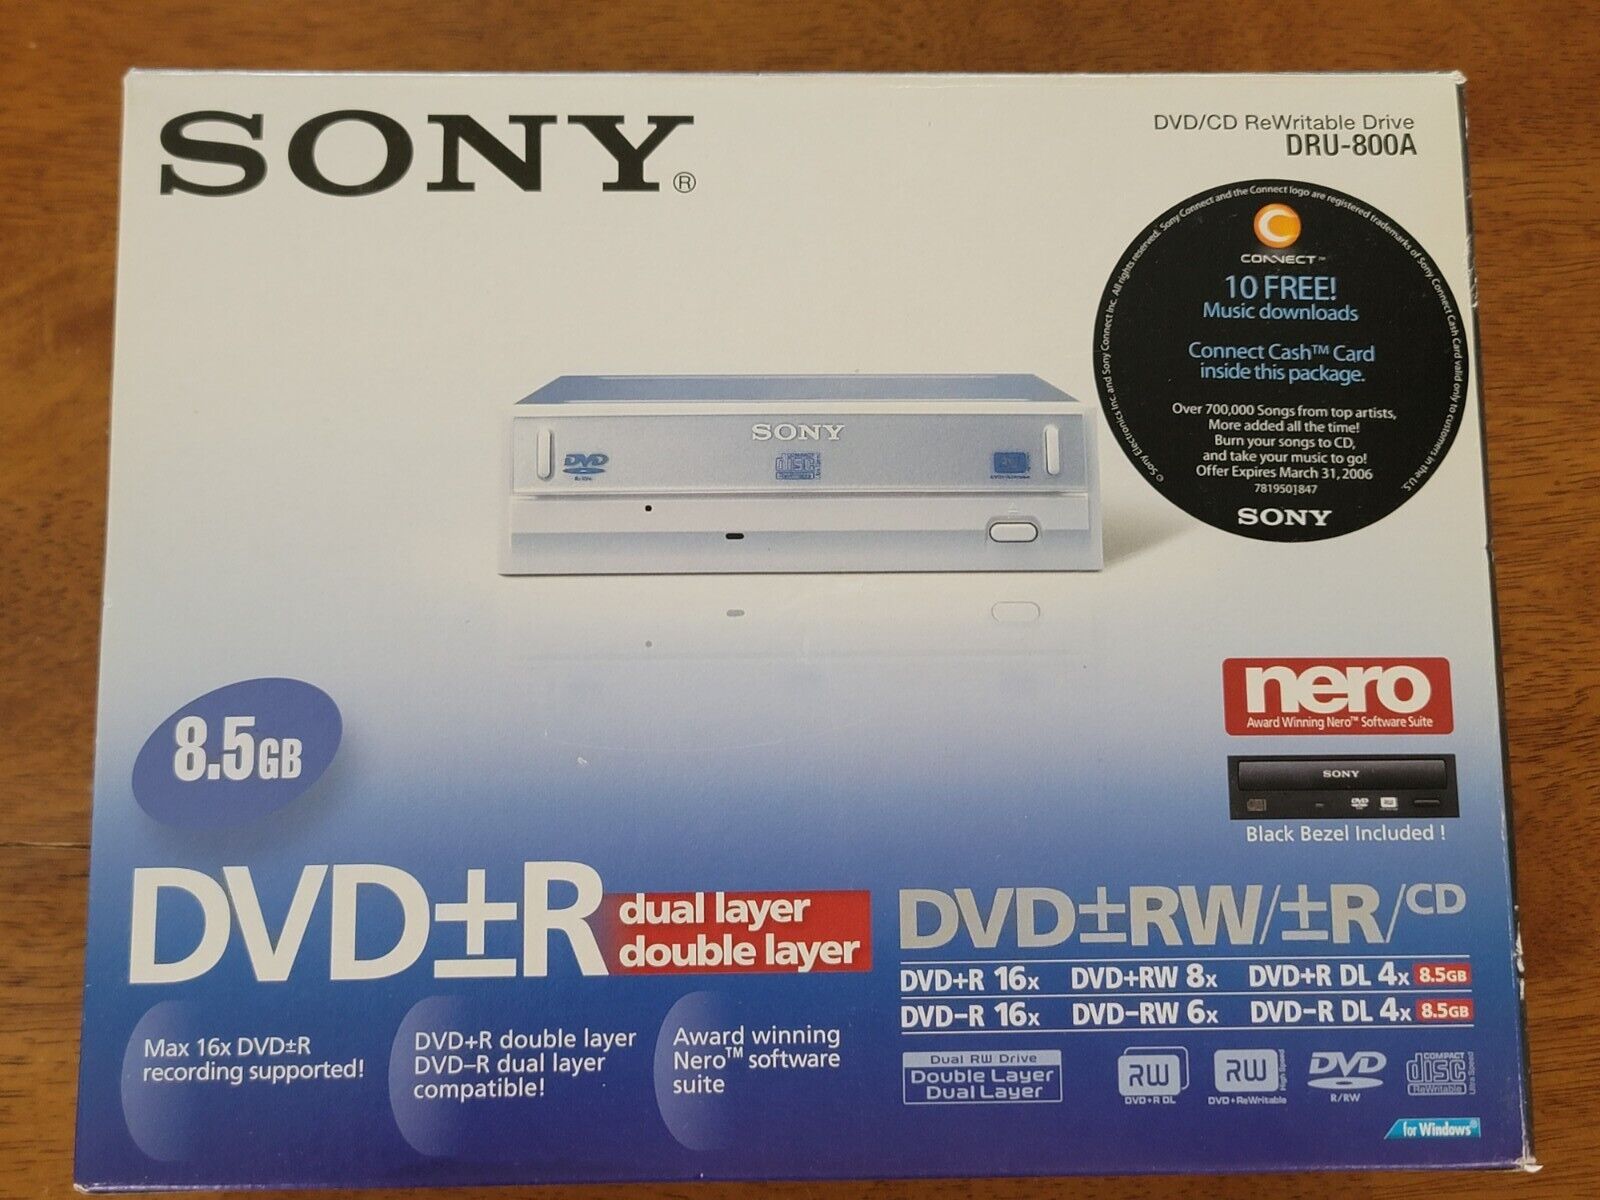 Sony DVD+-R Dual Layer 8.5GB 16X Rewritable DVD/CD Burner DRU-800A.Never Opened.